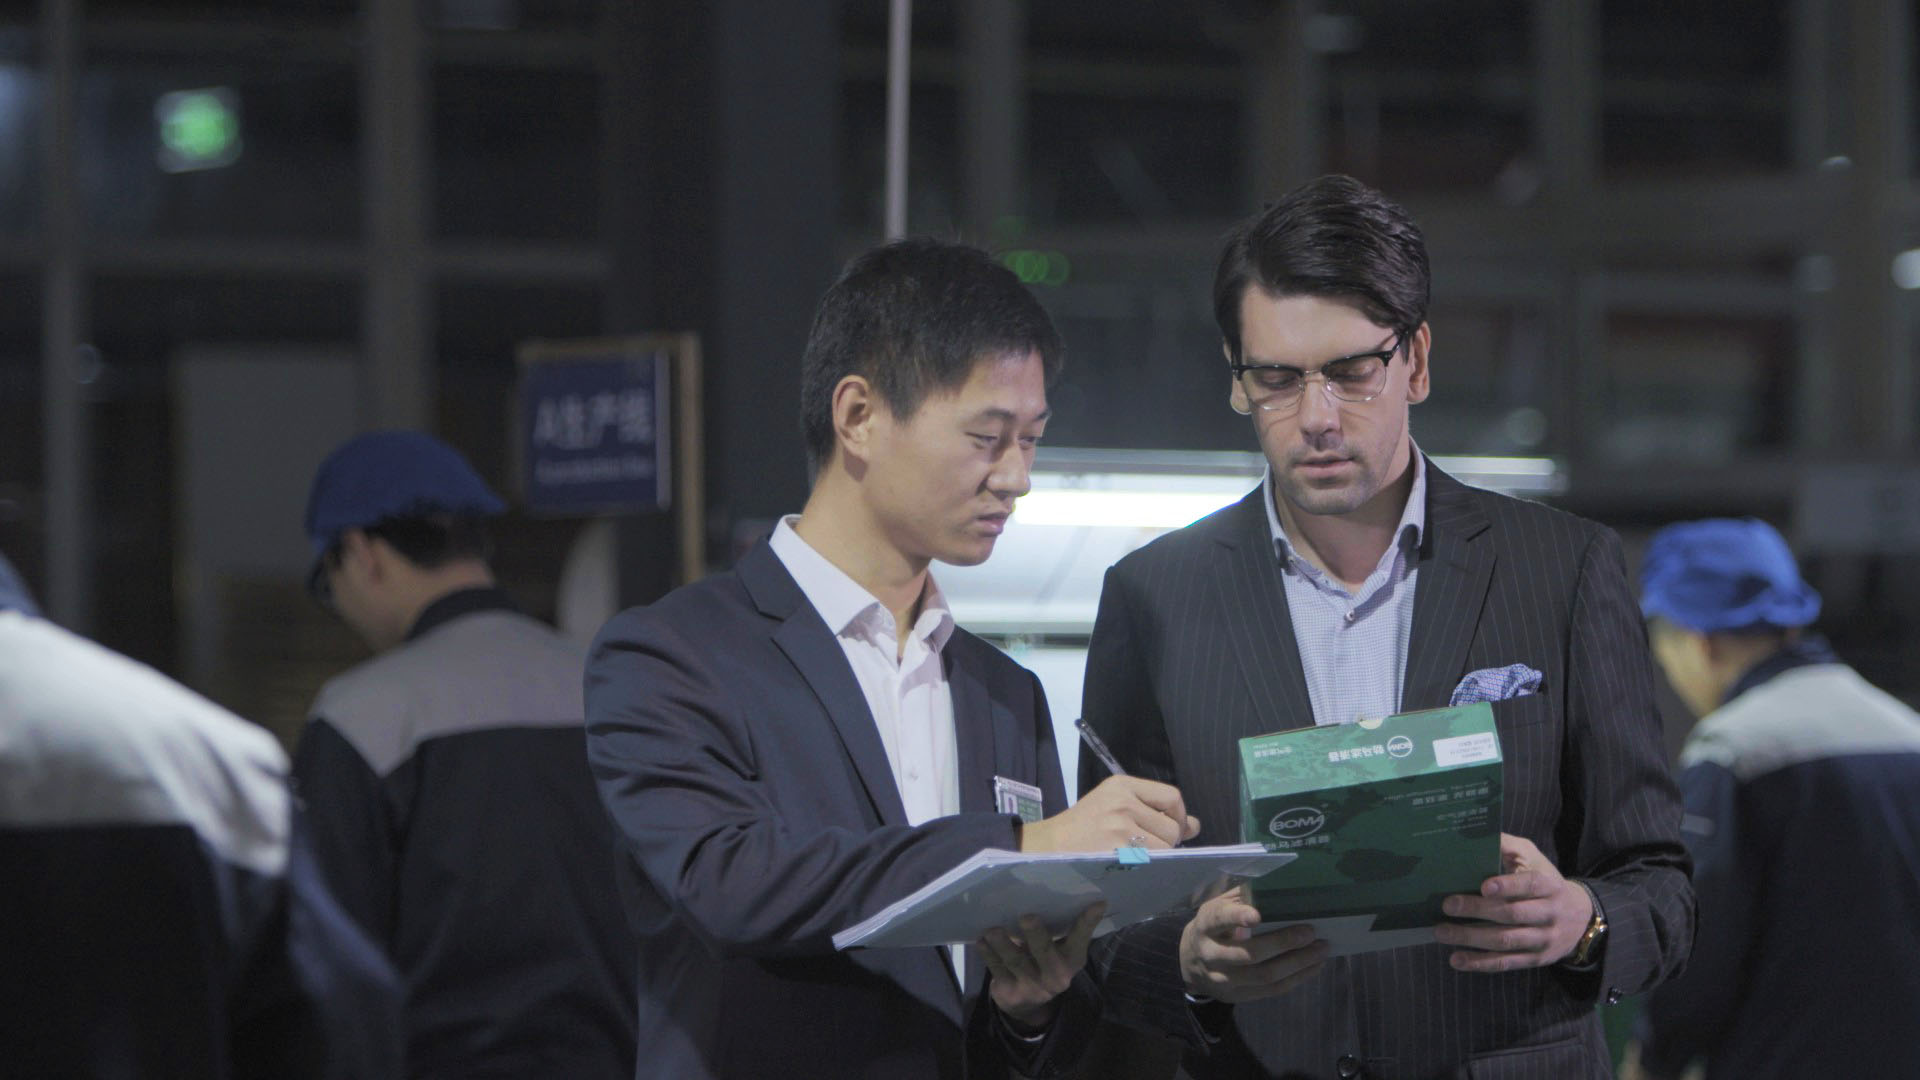 Welcome to Filton Tech Shanghai Co, Ltd.